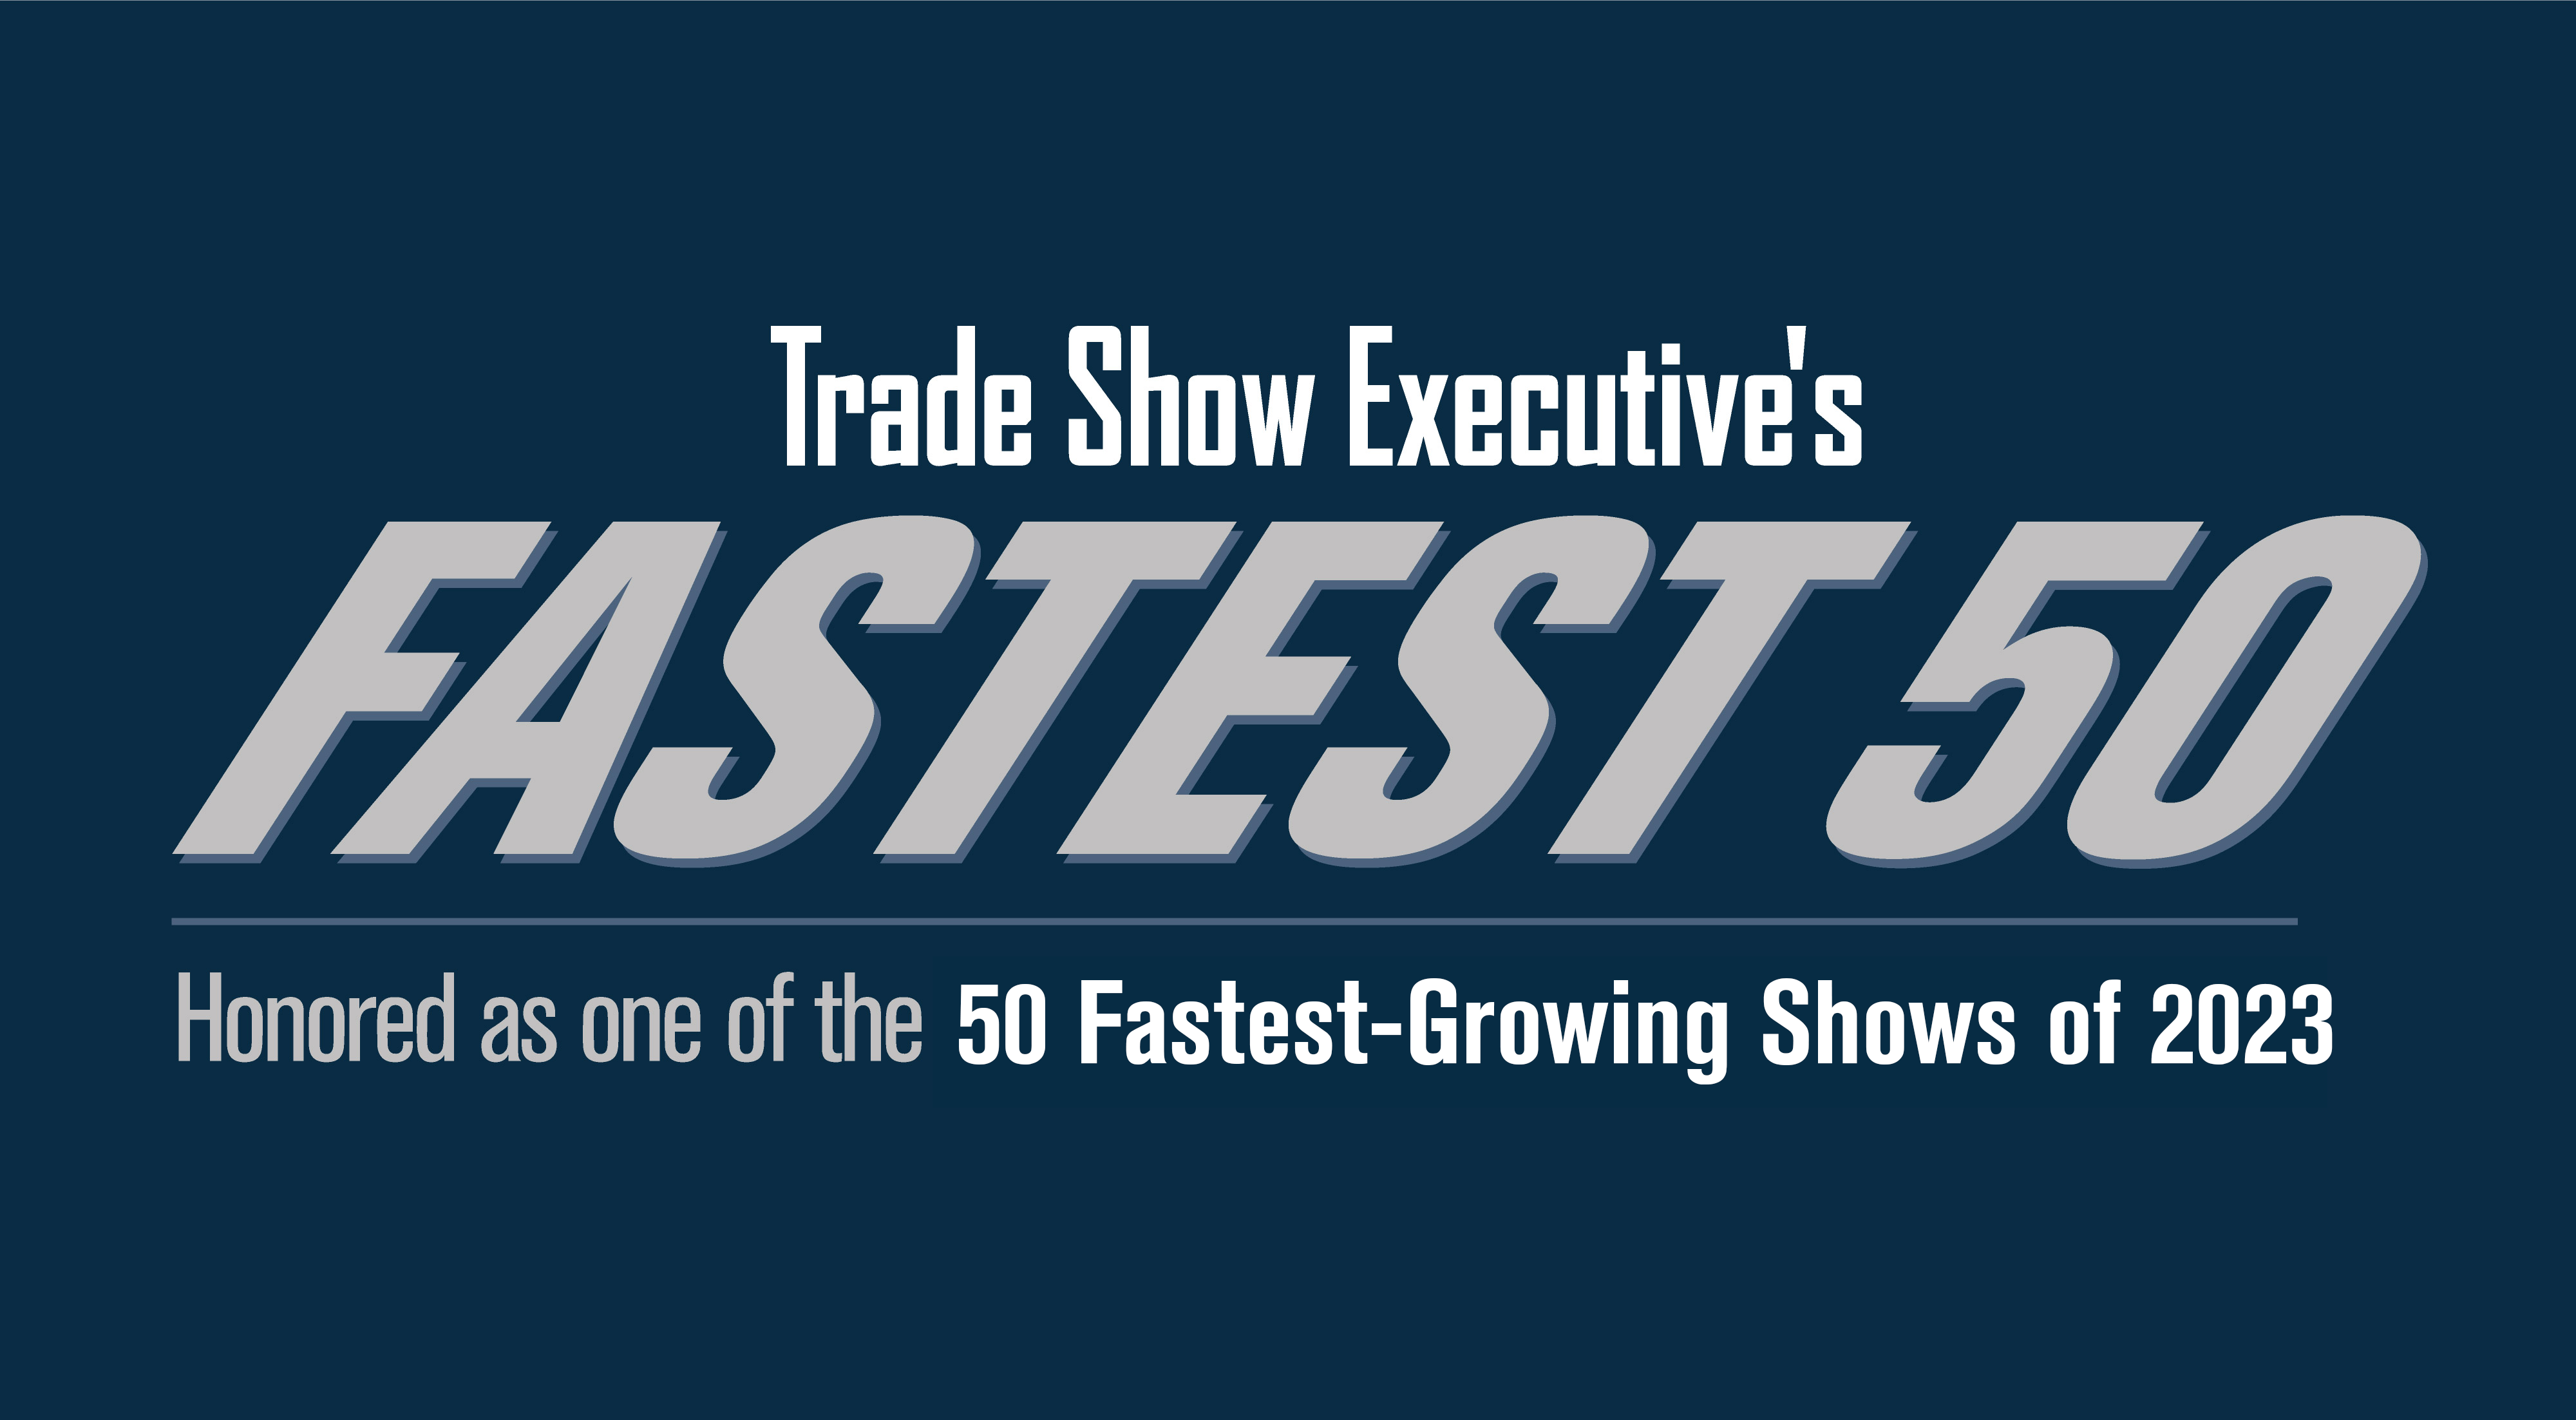 Trade Show Executive's Fastest 50